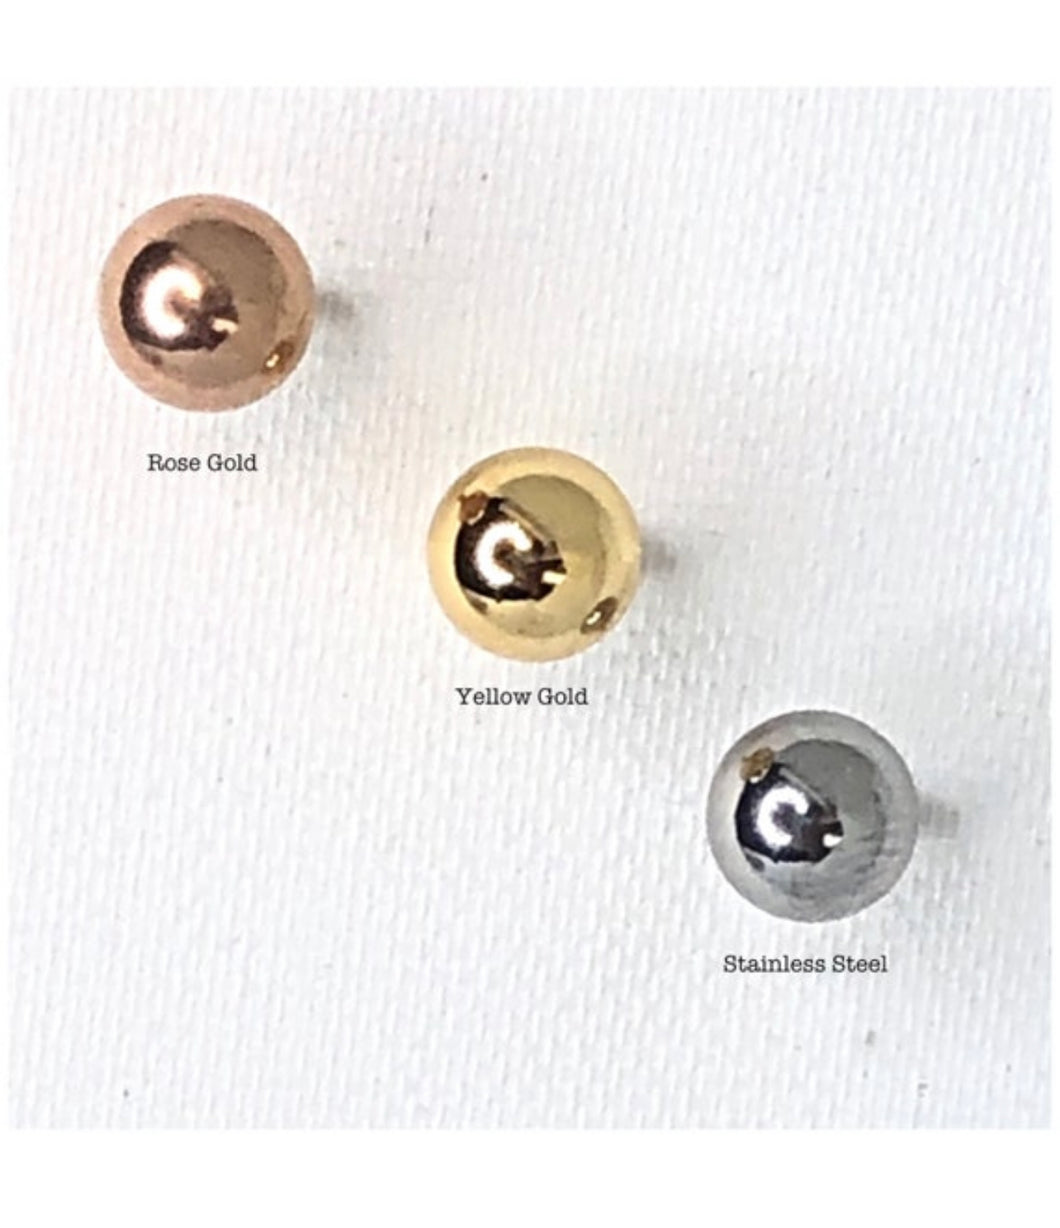 Plugs gauges Stainless steel metal ball silver / gold ball plugs stainless steel plugs gauges 14g -1g